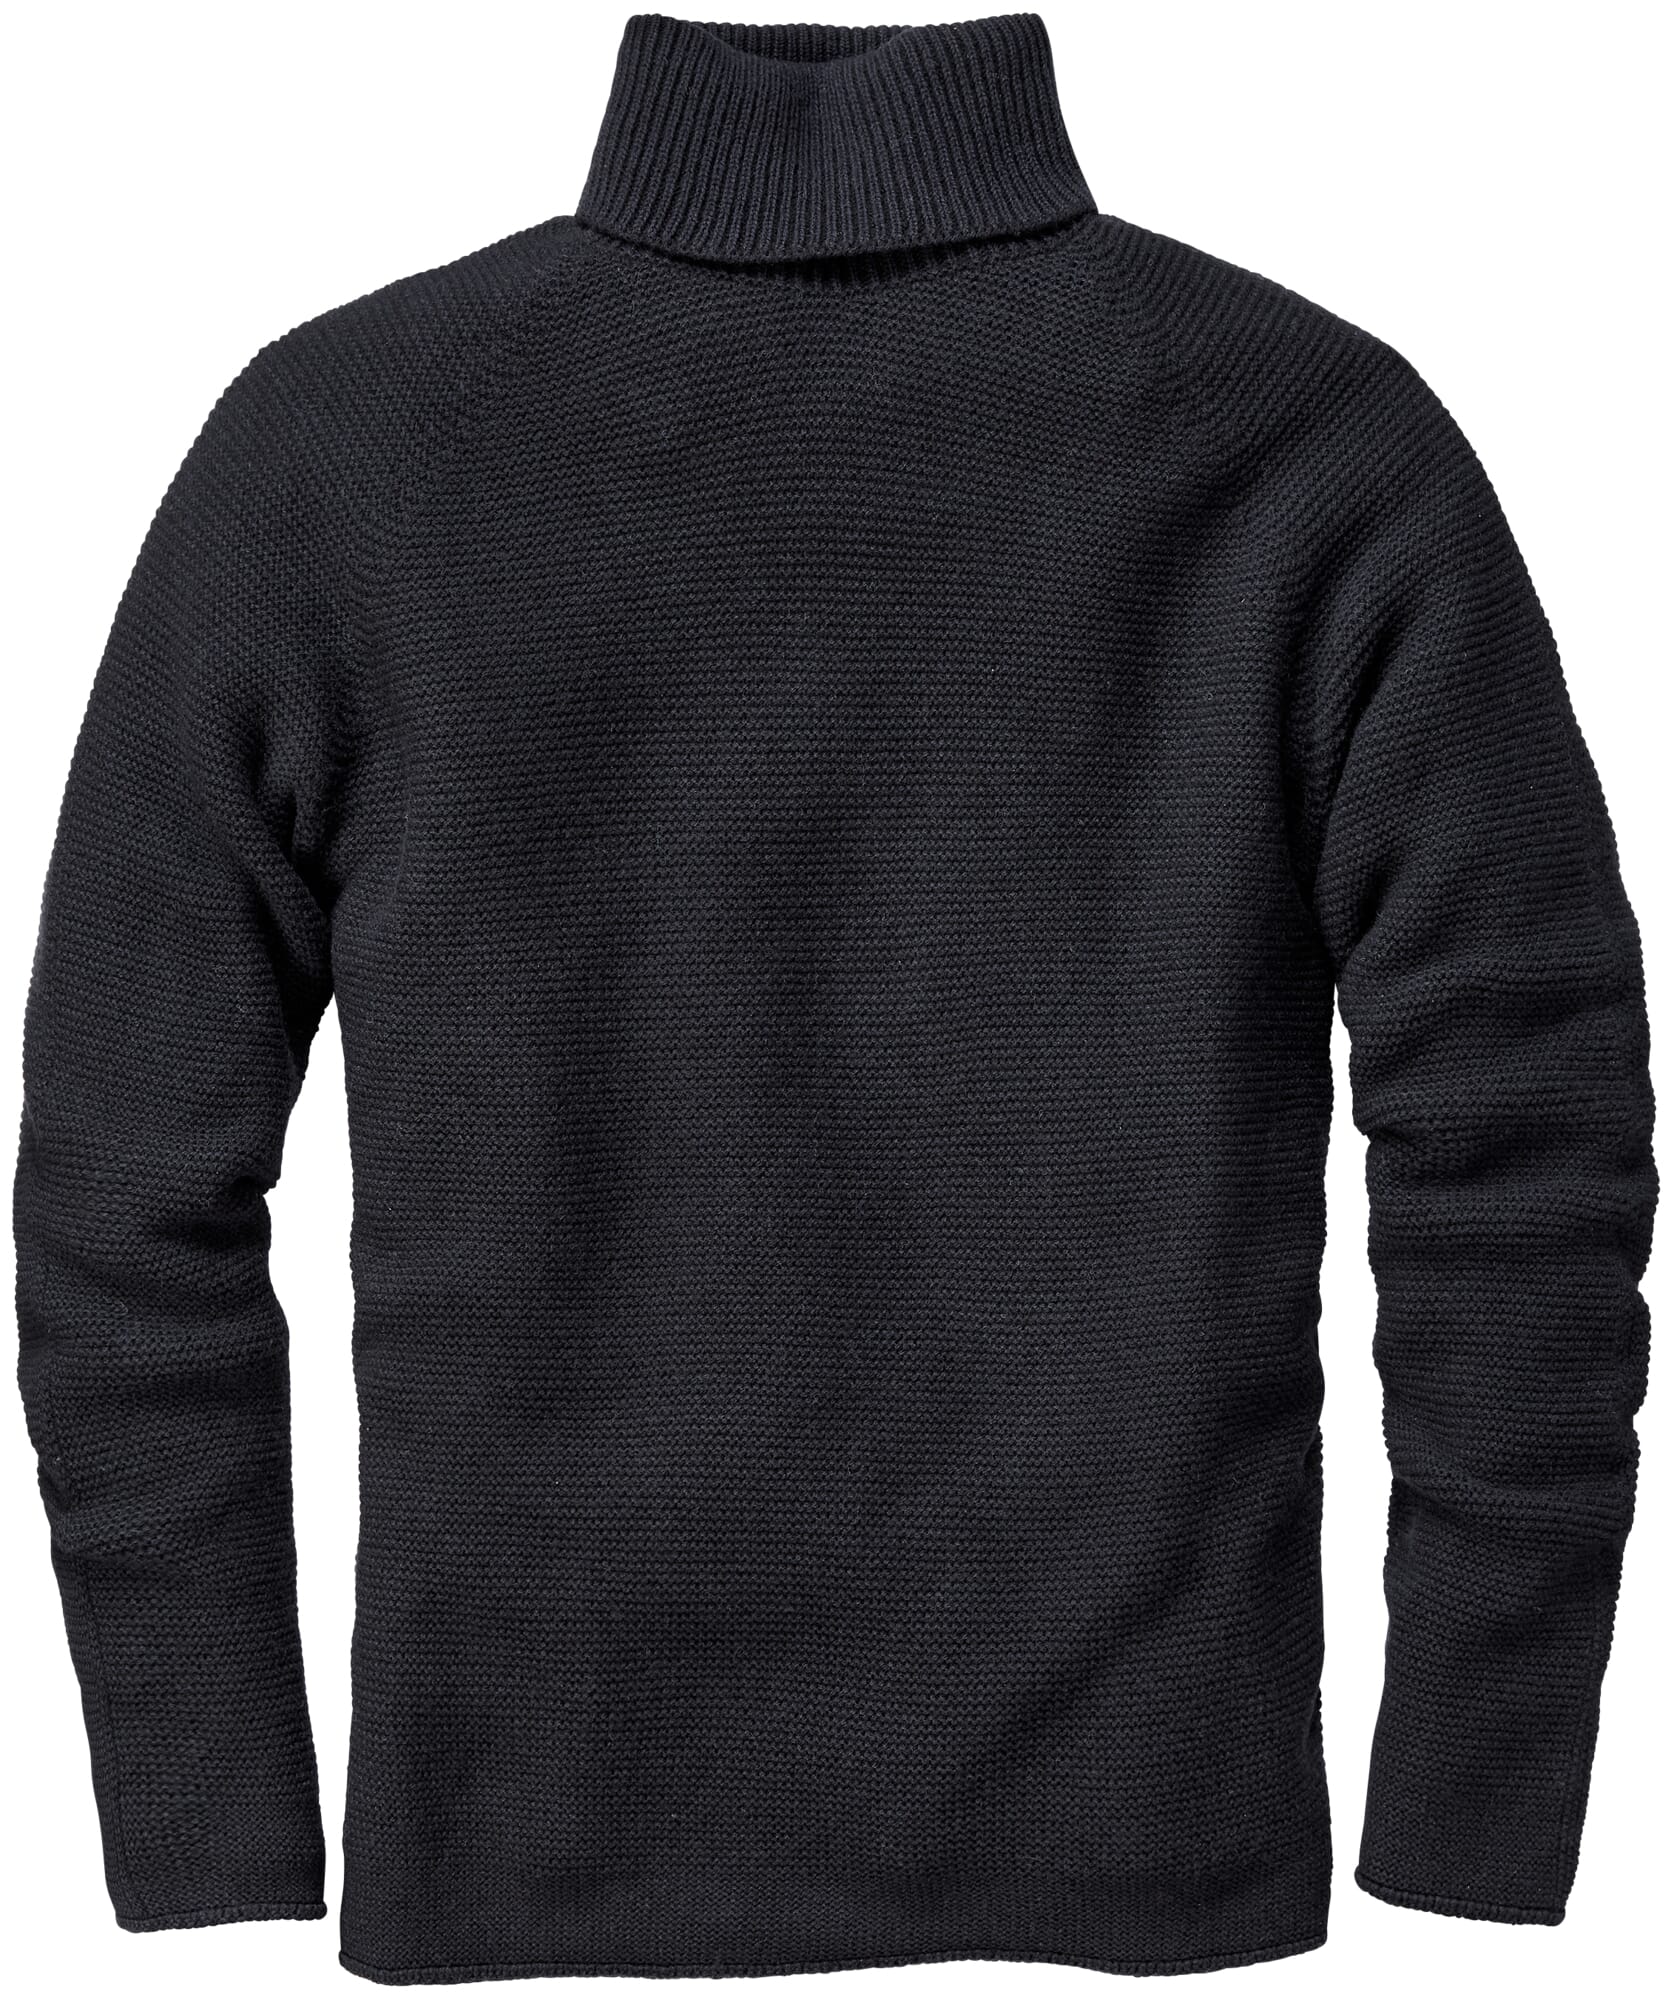 Sheet imply beast Men's turtleneck sweater, Black-blue | Manufactum